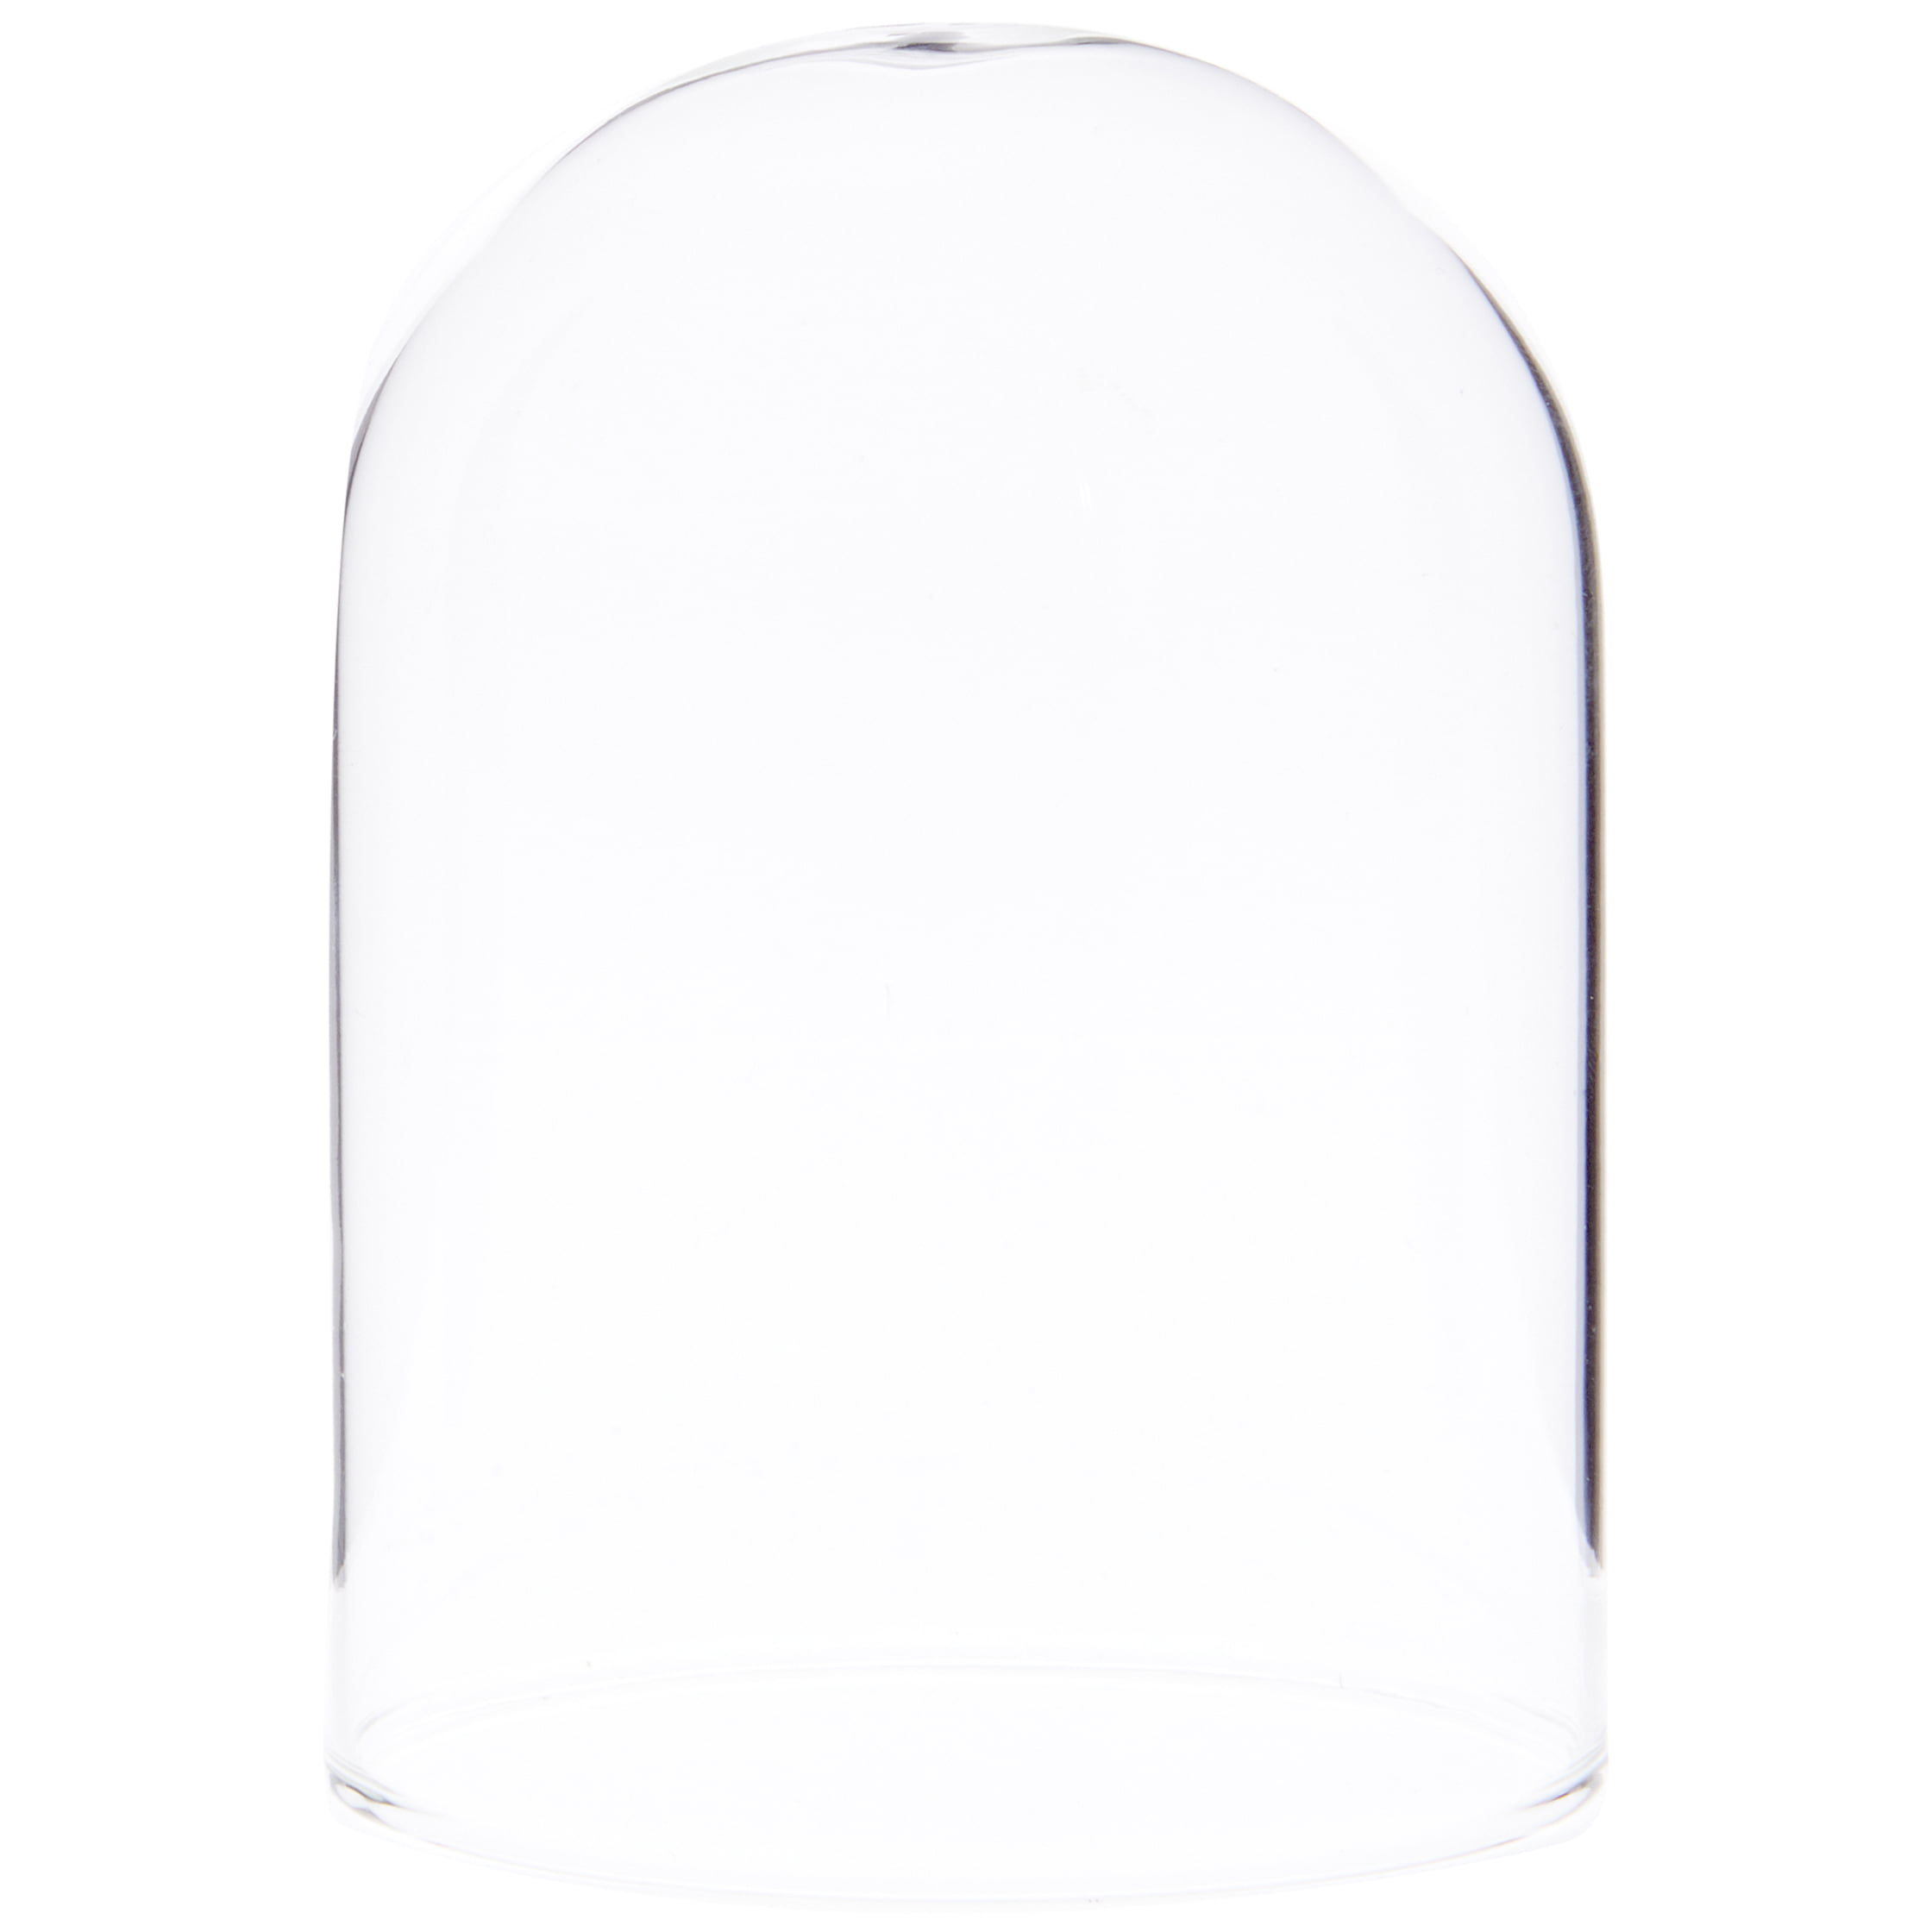 Plymor 5.5" x 5.5" Glass Display Dome Cloche Dark Mahogany Veneer Base 